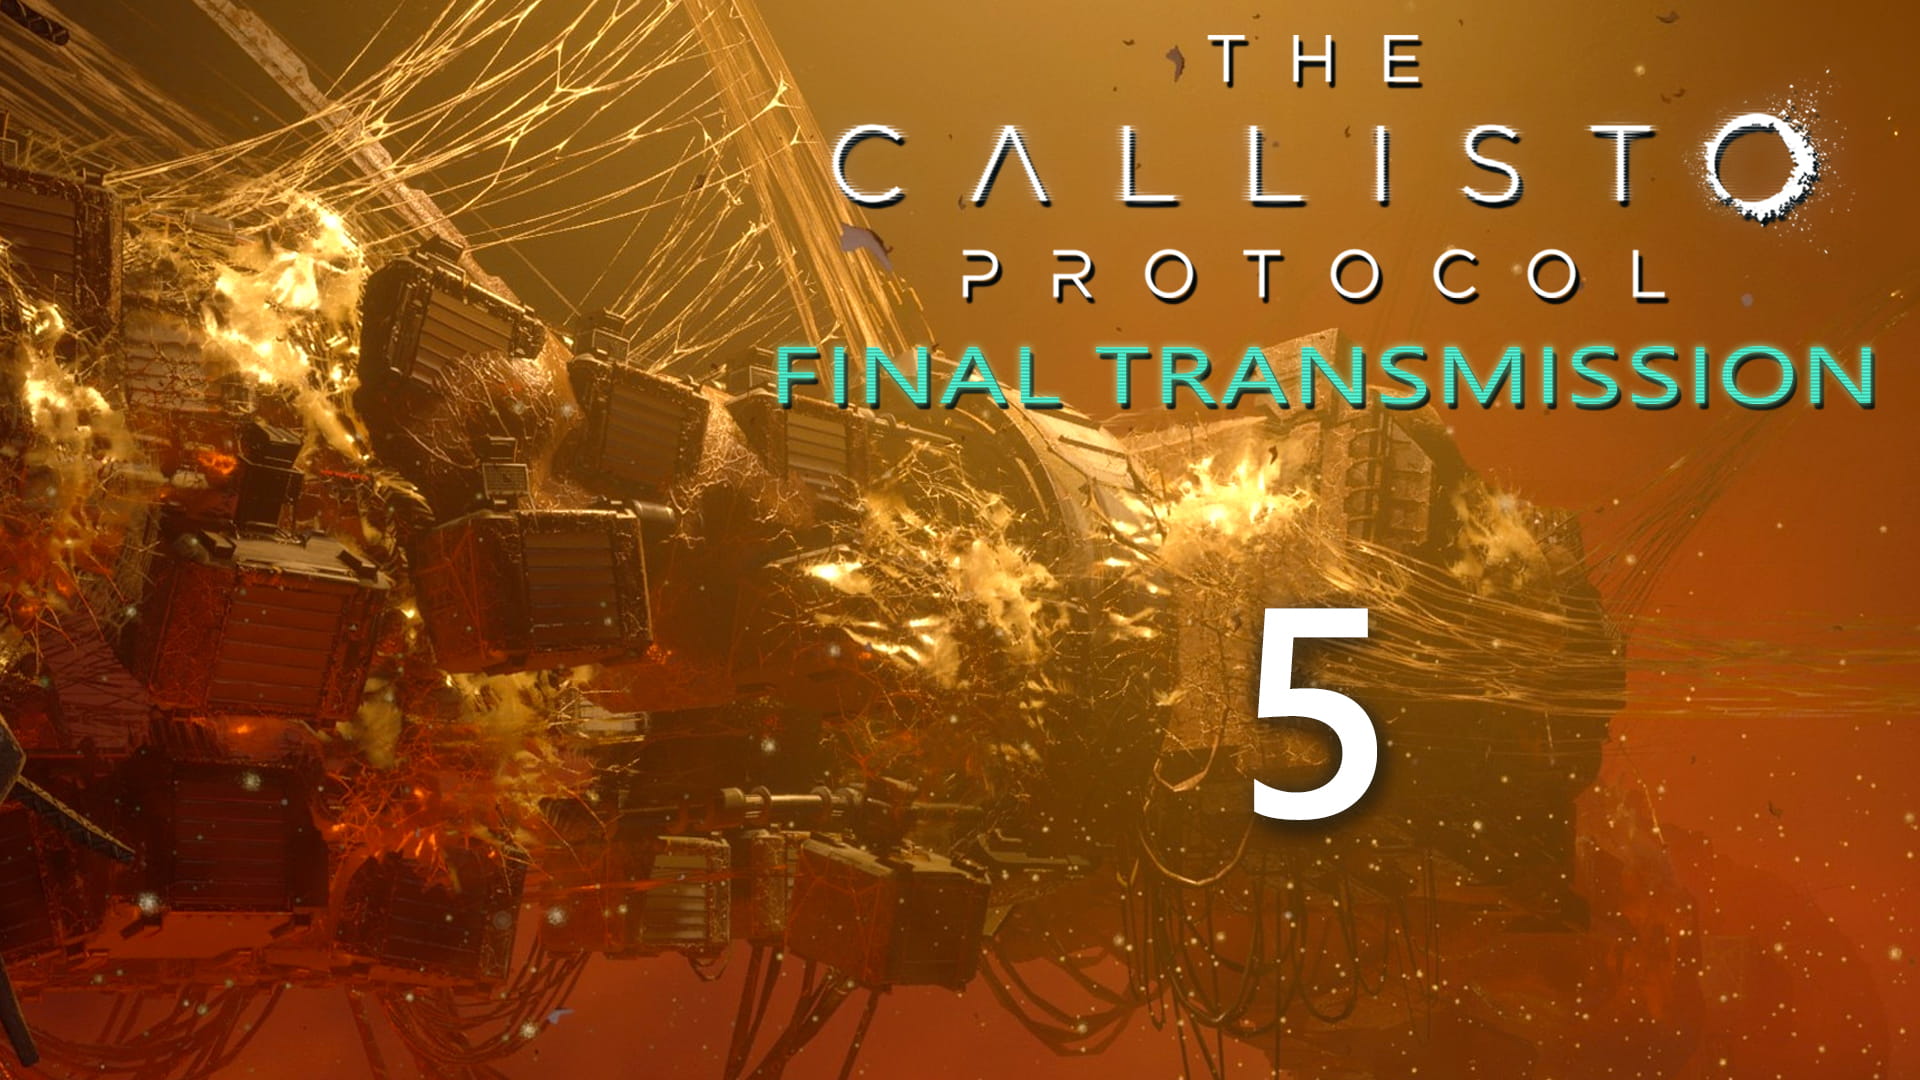 Final transmission. The Callisto Protocol Final transmission poster. The Callisto Protocol Final transmission logo.